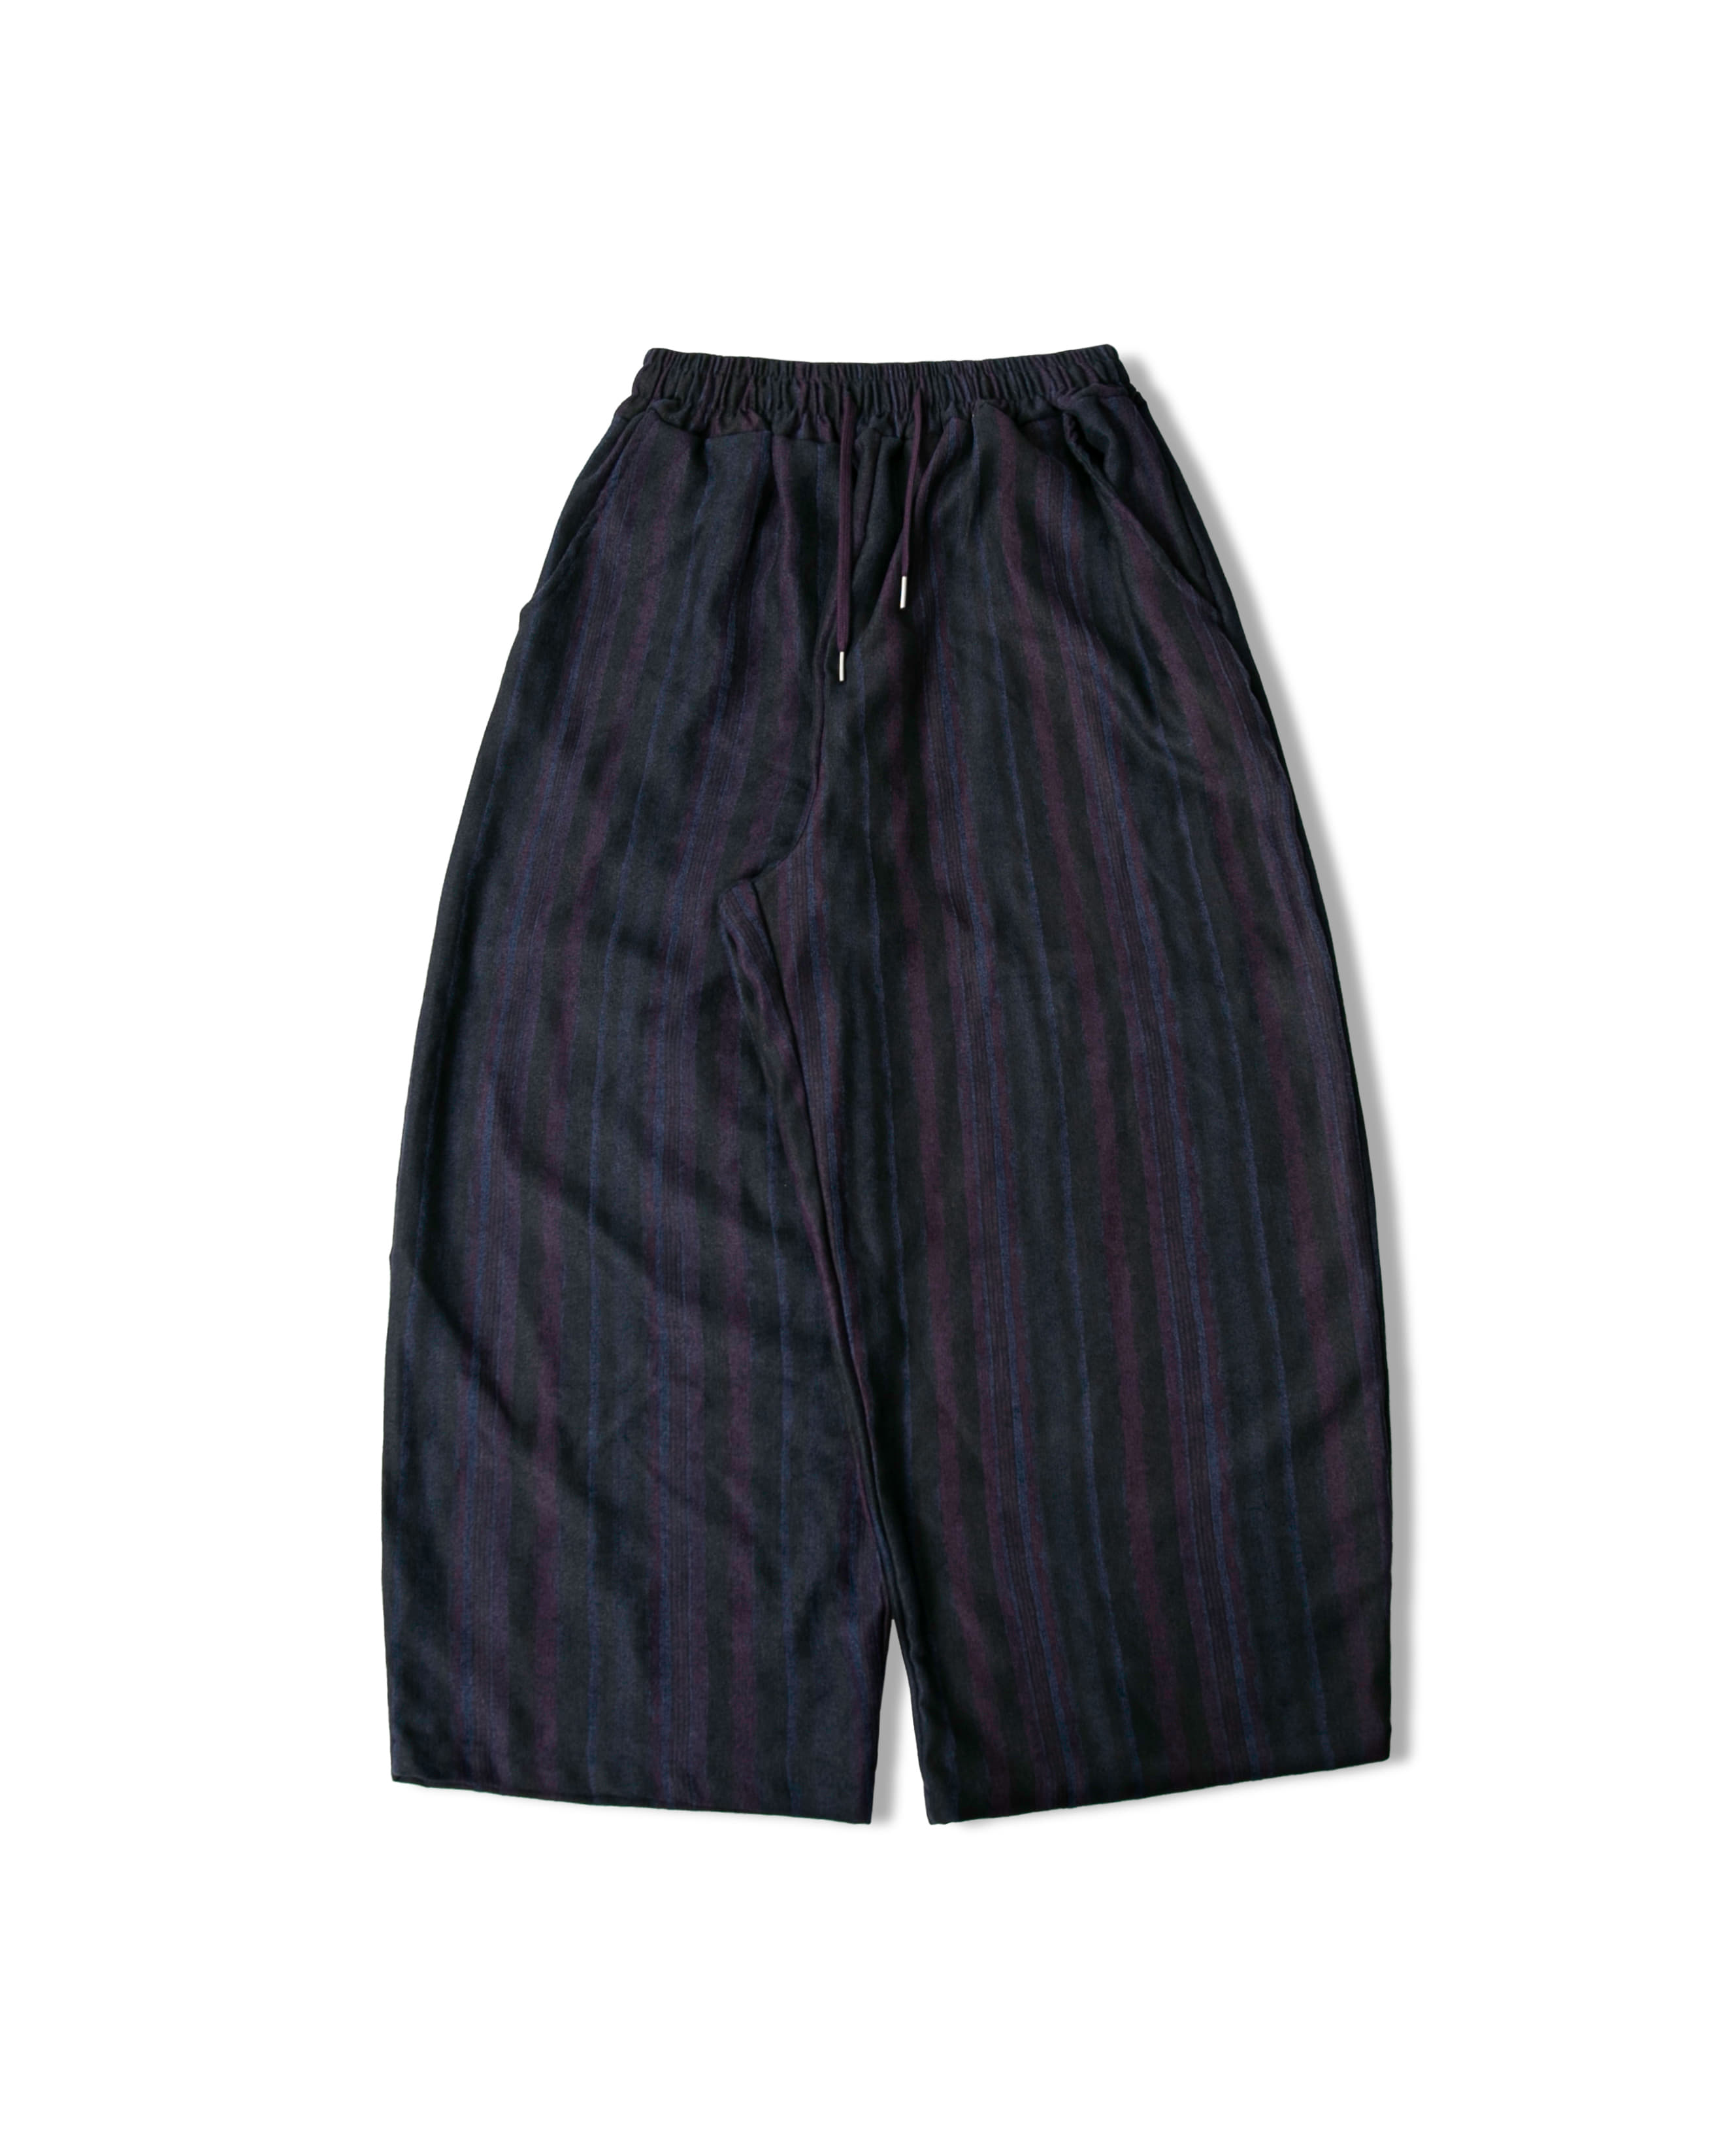 Stripe Multi Chic Pants - Purple